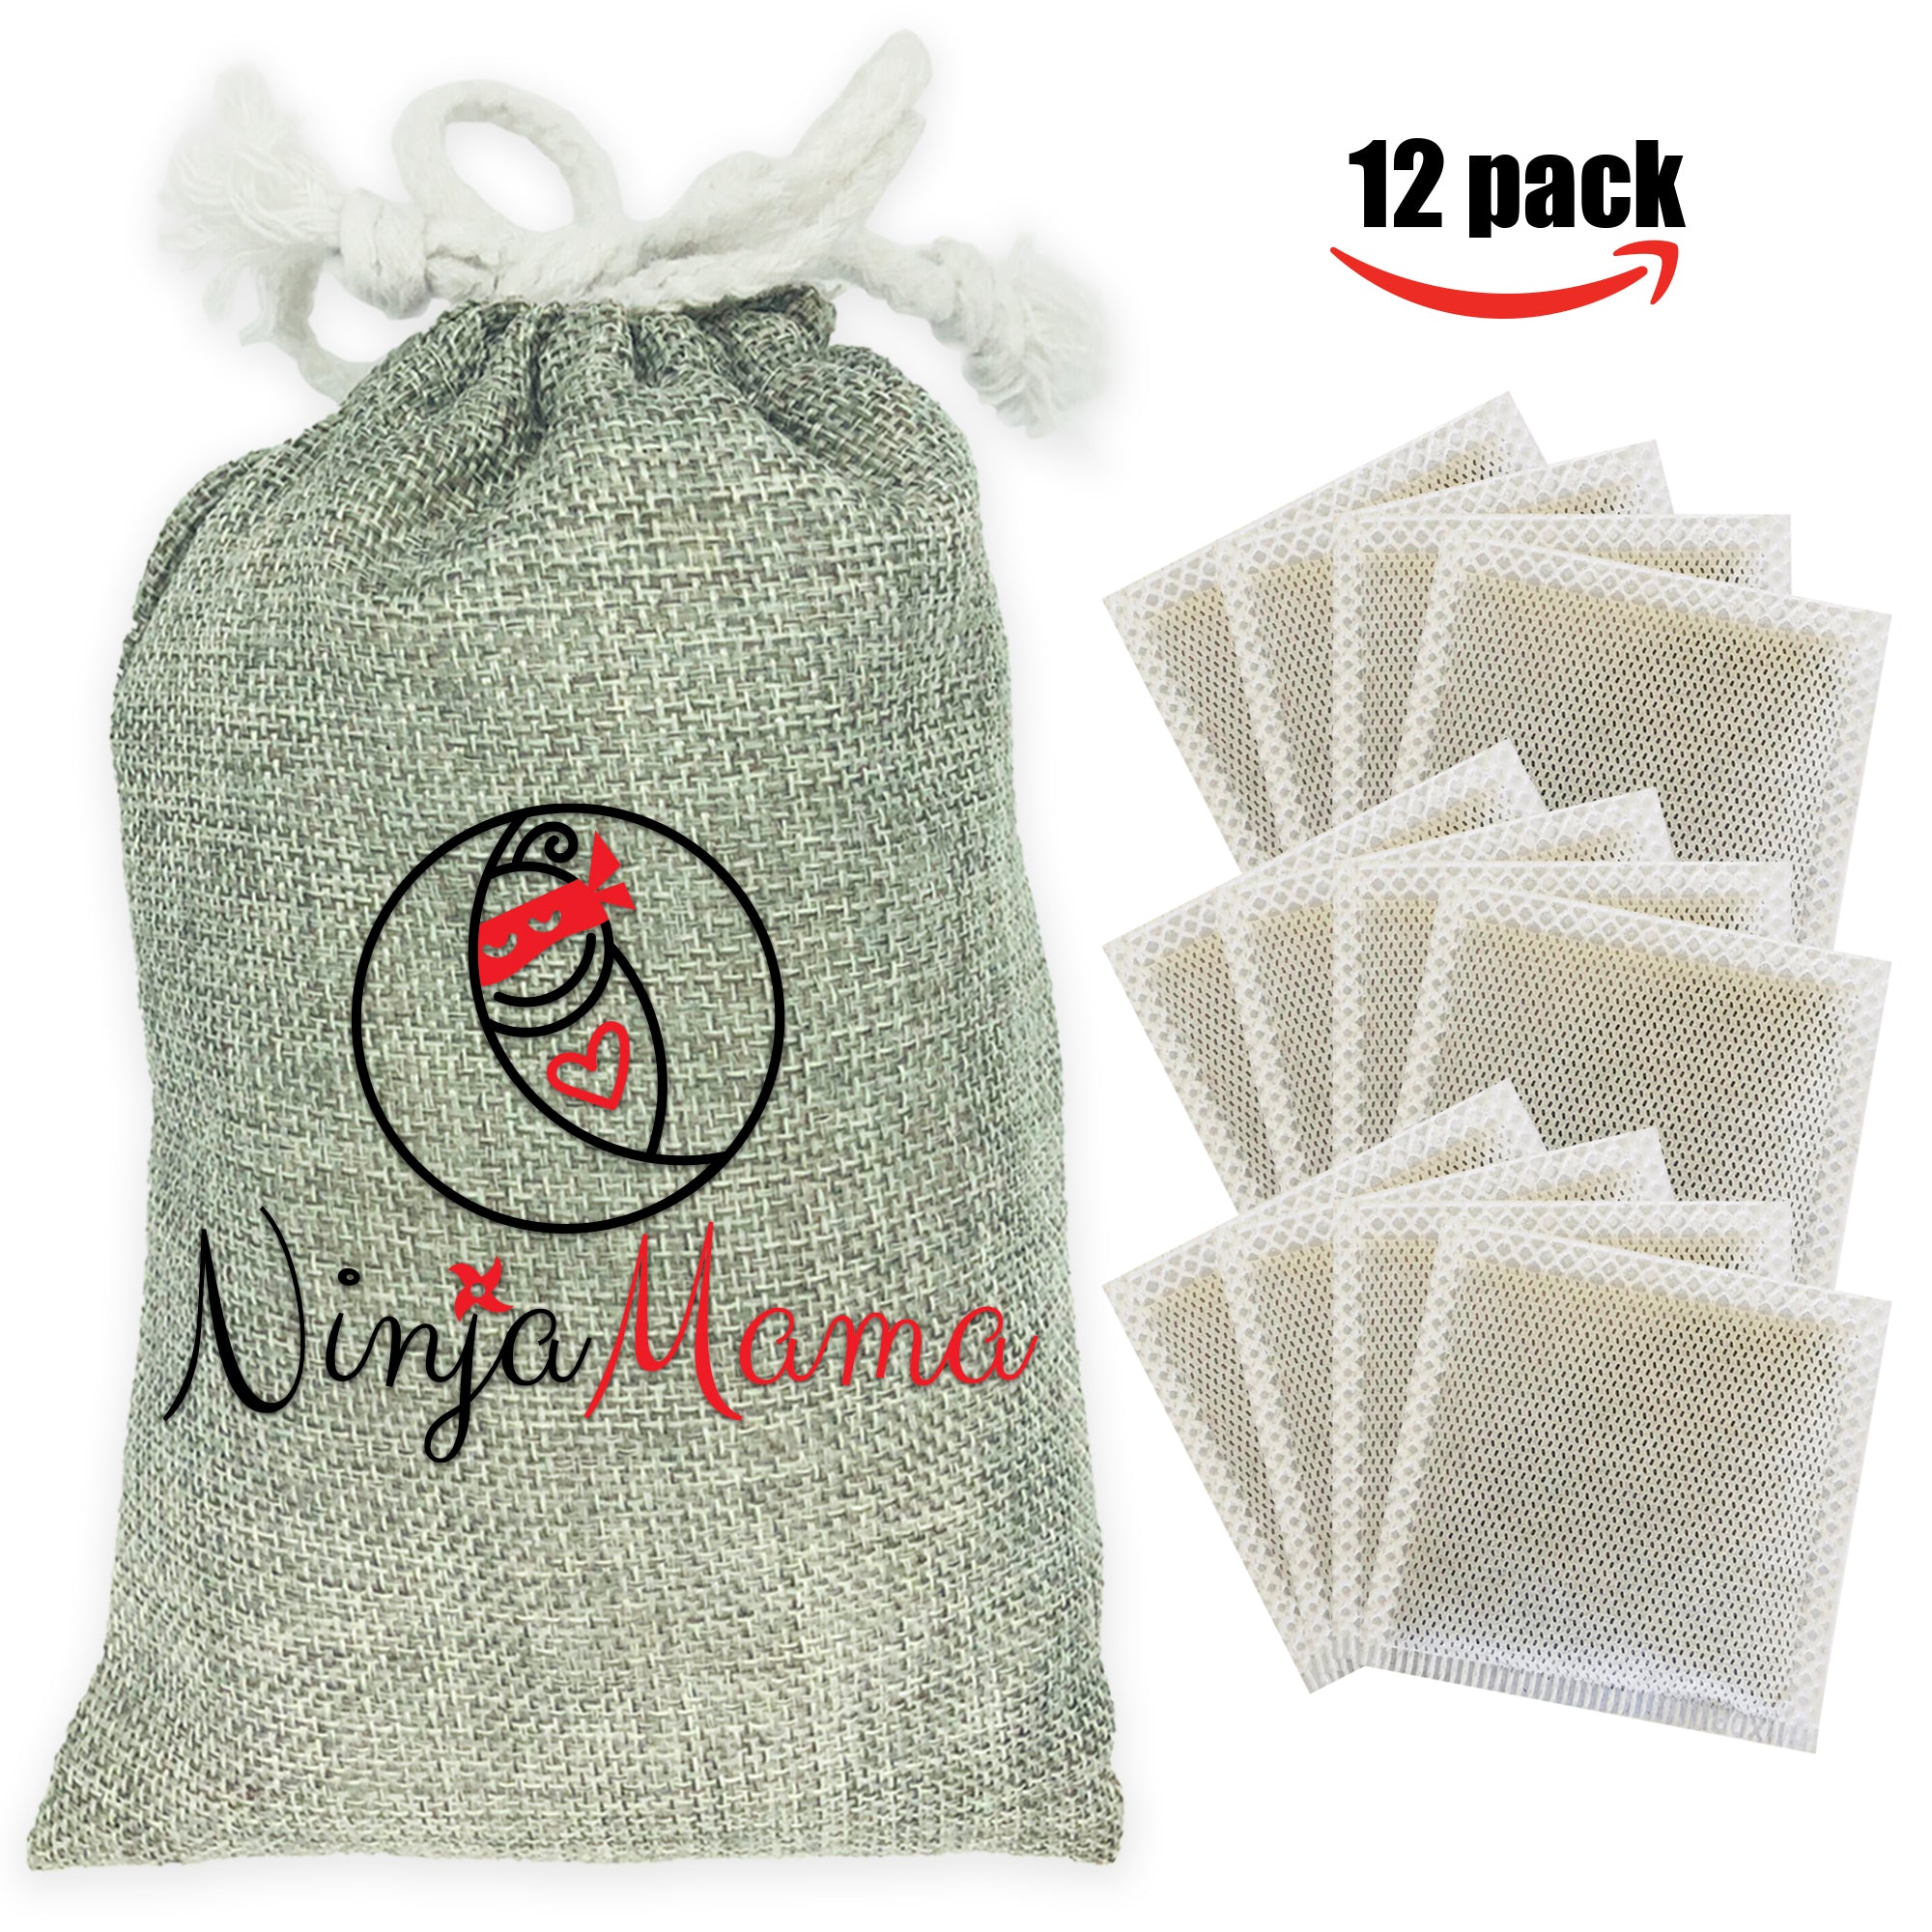 Wholesale Ninja Mama Breast Therapy Packs - Pack of 2 (Hot or Cold) - Ninja  Mama - Fieldfolio